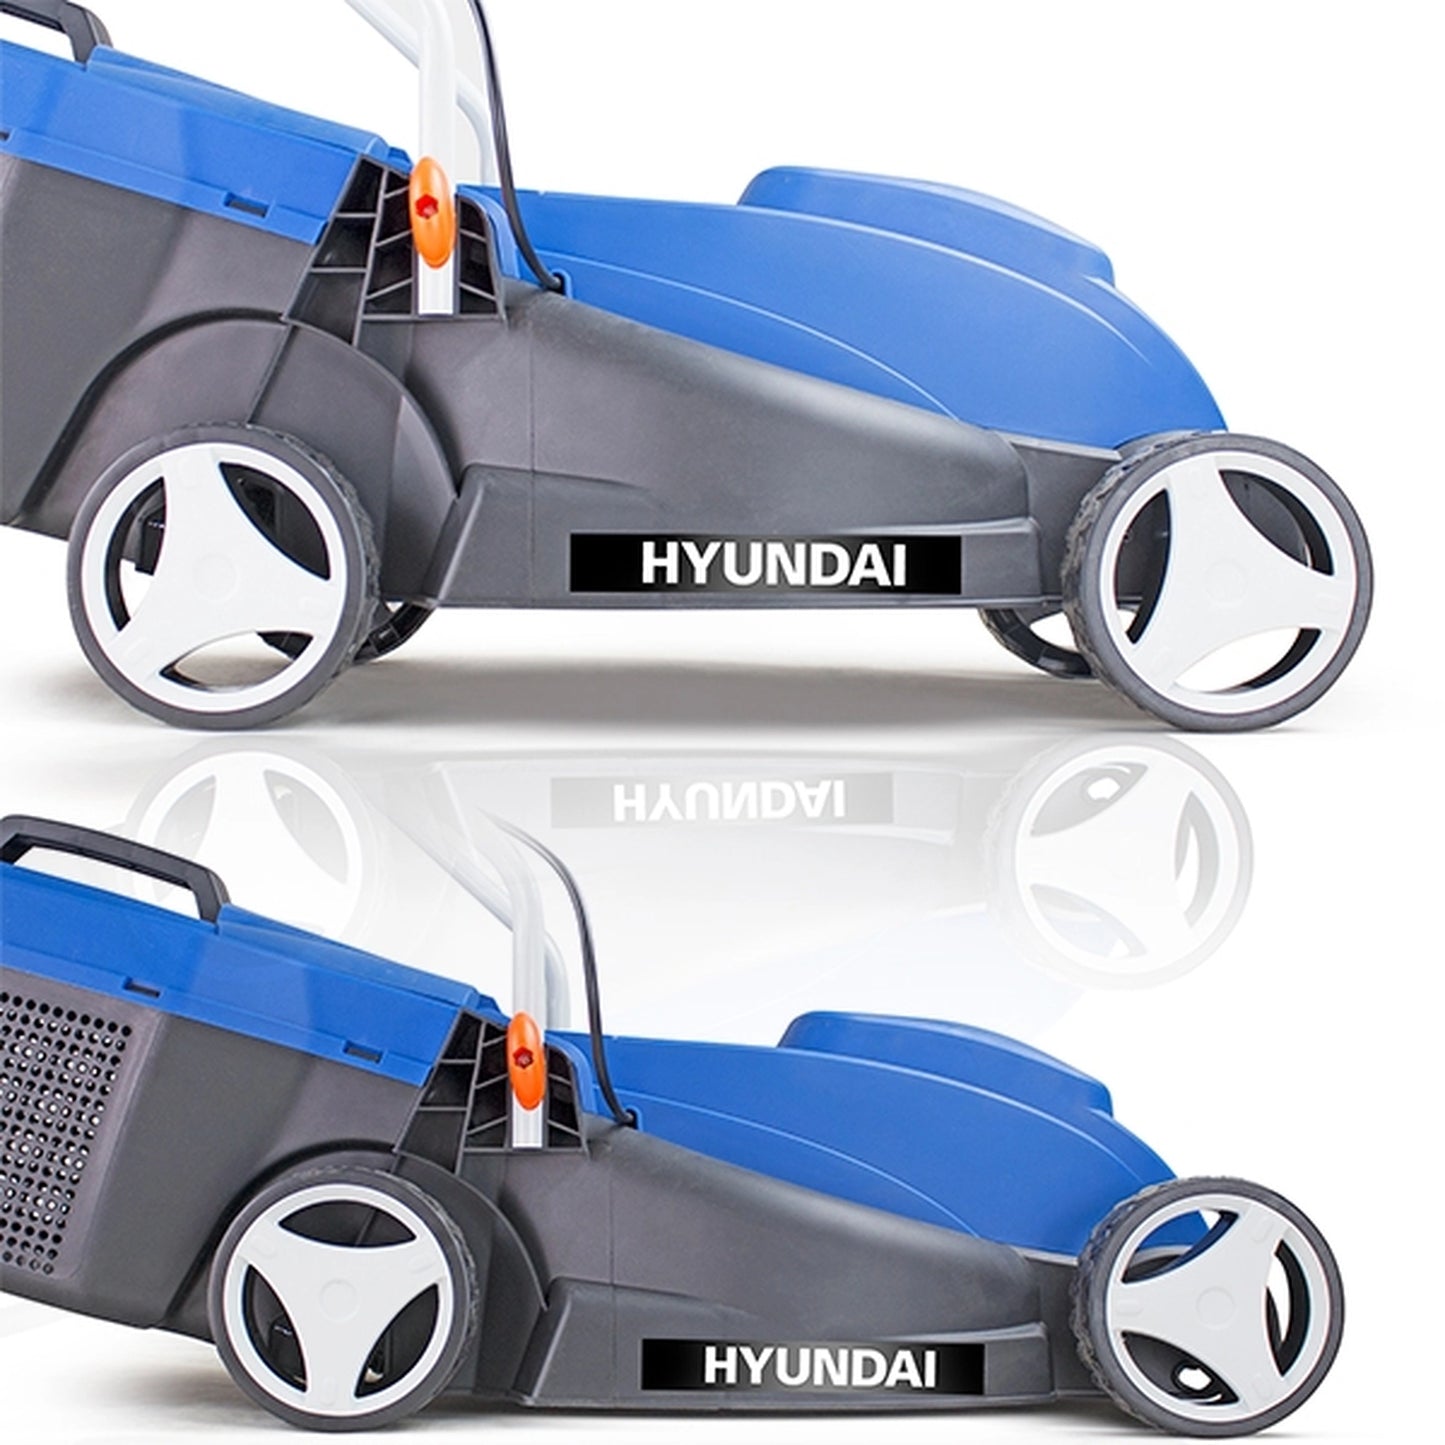 Hyundai HYM3200E Electric Lawn Mower 32cm